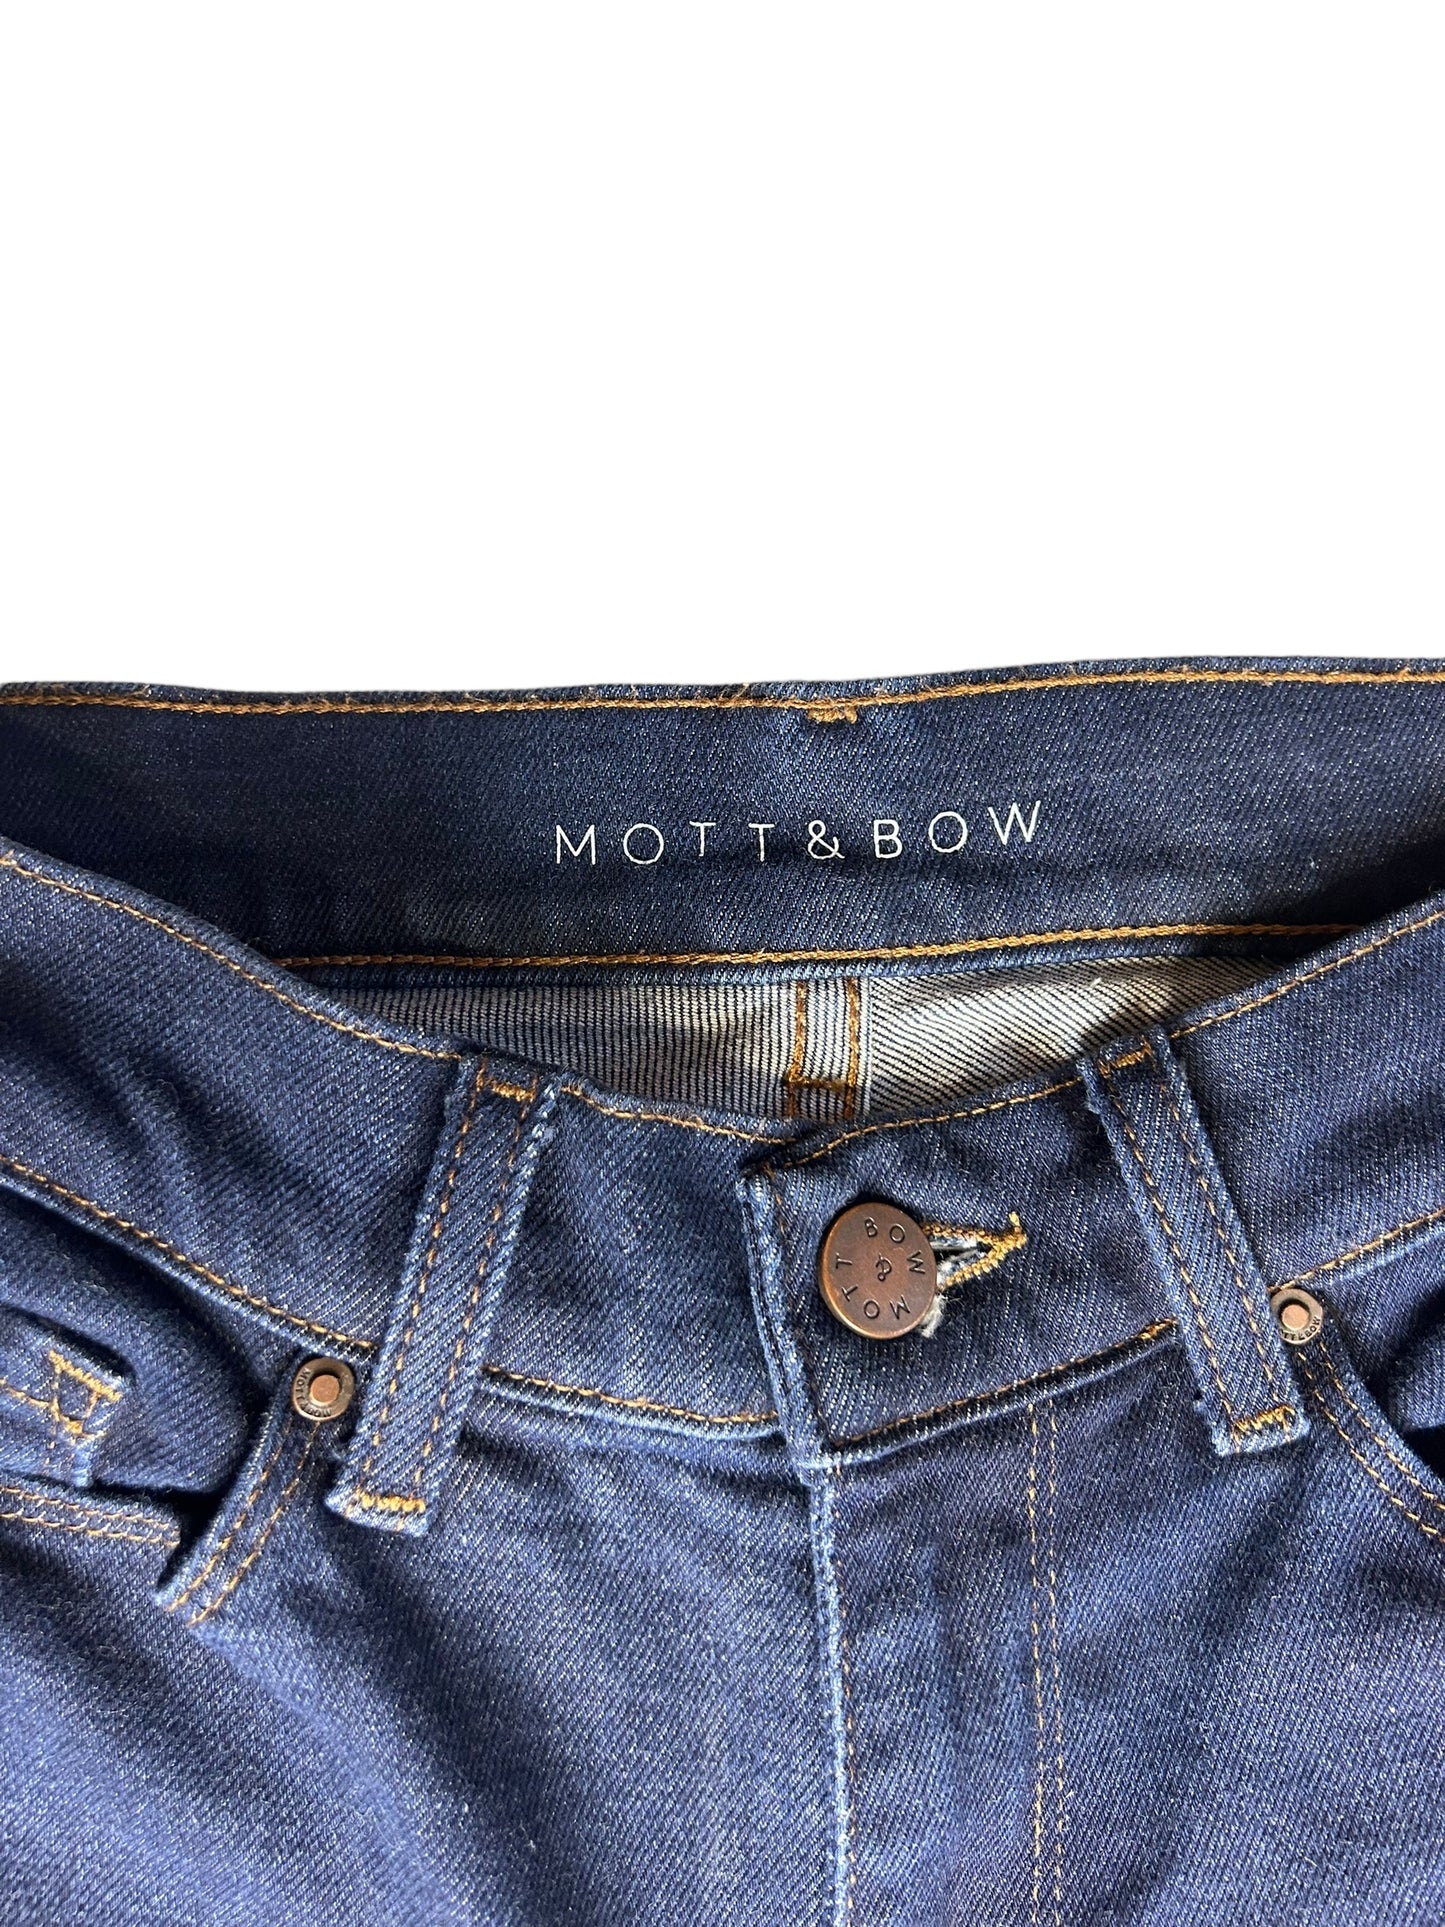 Mott & Bow Women's Skinny Jeans Denim Dark Indigo - Size 24